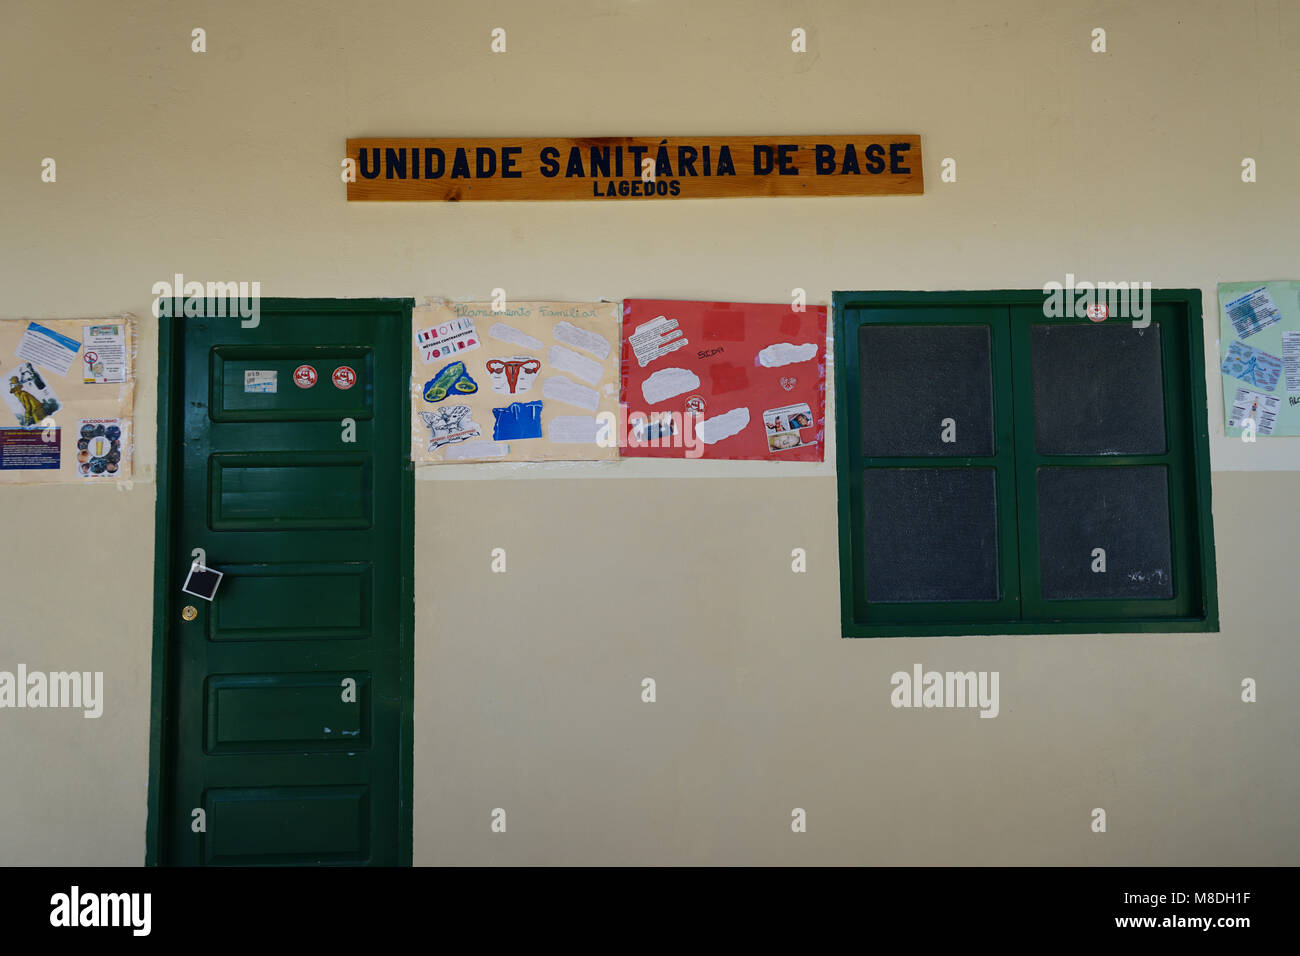 Unidade Sanitaria de Base, Base Health Unit, Lagedos, Santo Antao, Kap Verde Stockfoto